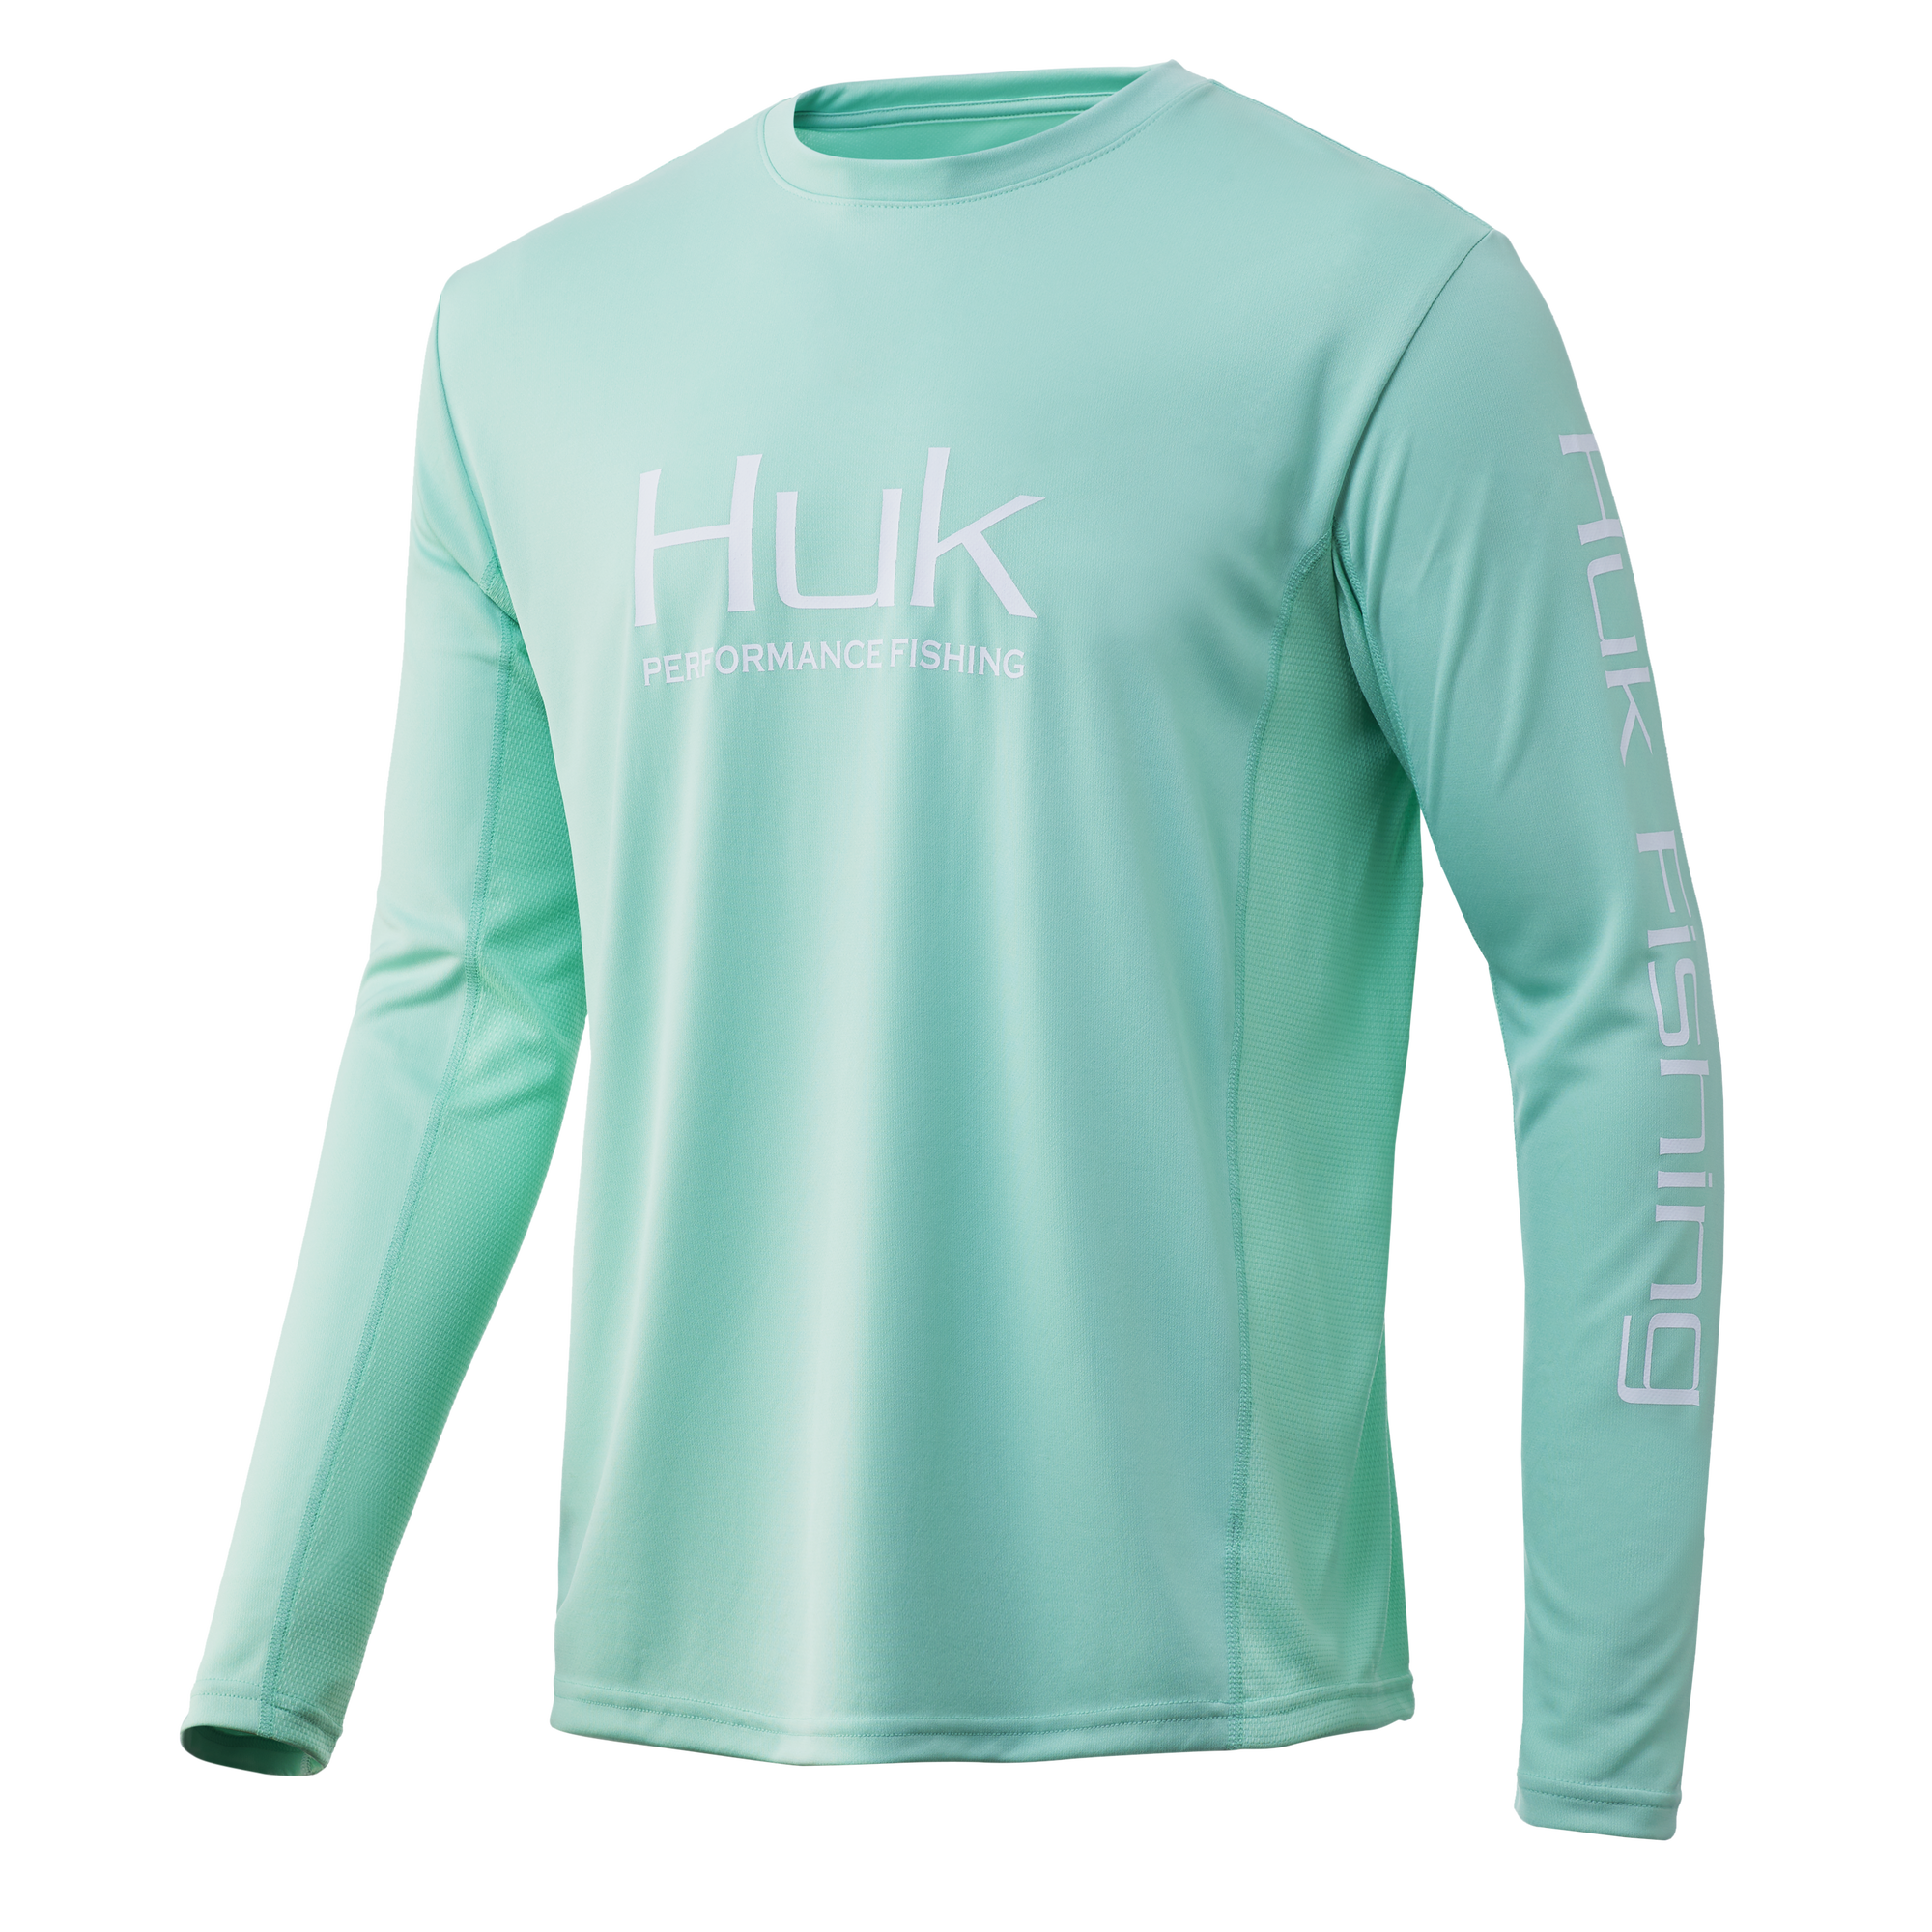 Huk Men's Icon x Performance Fishing Long Sleeve Shirt, XXL, Lichen